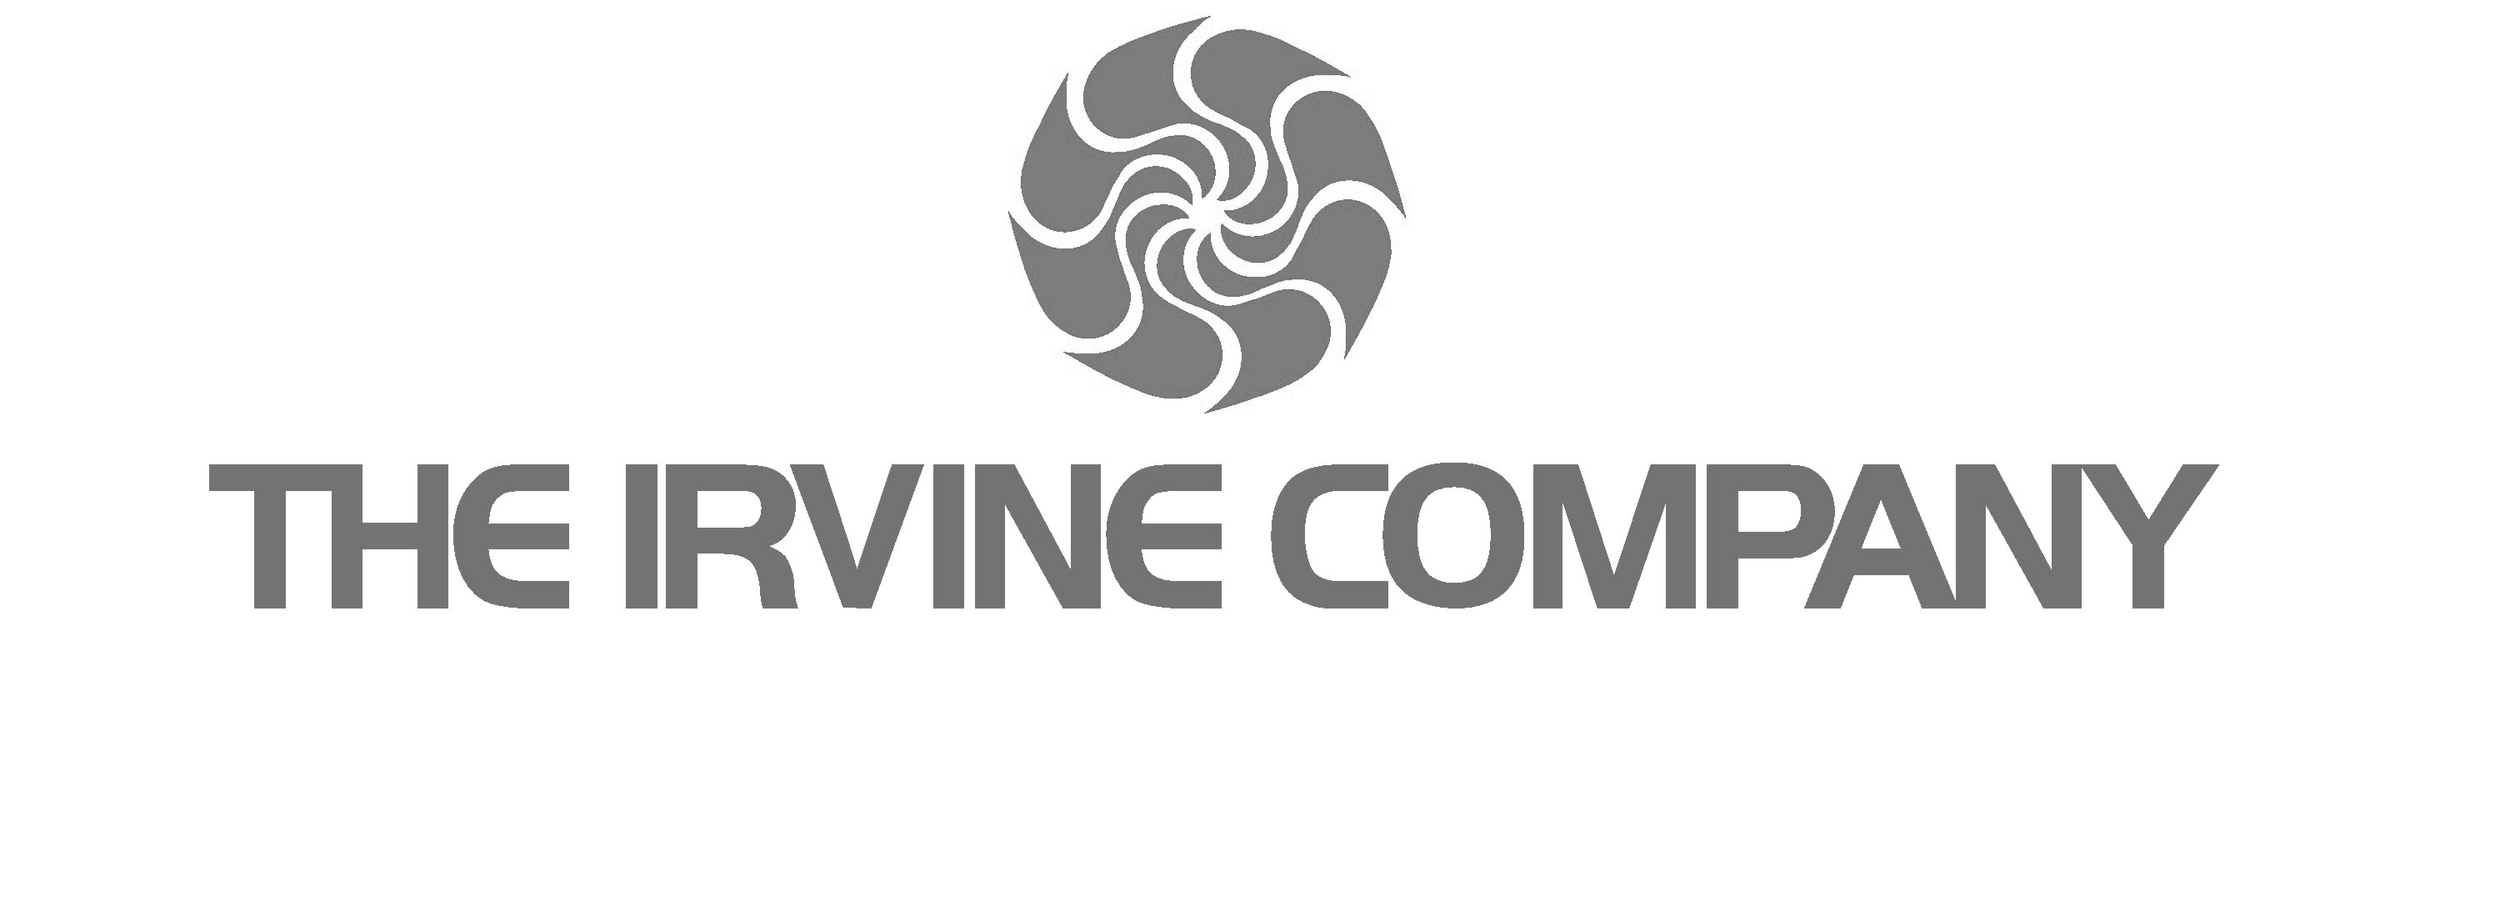 COM - Irvine Company.png